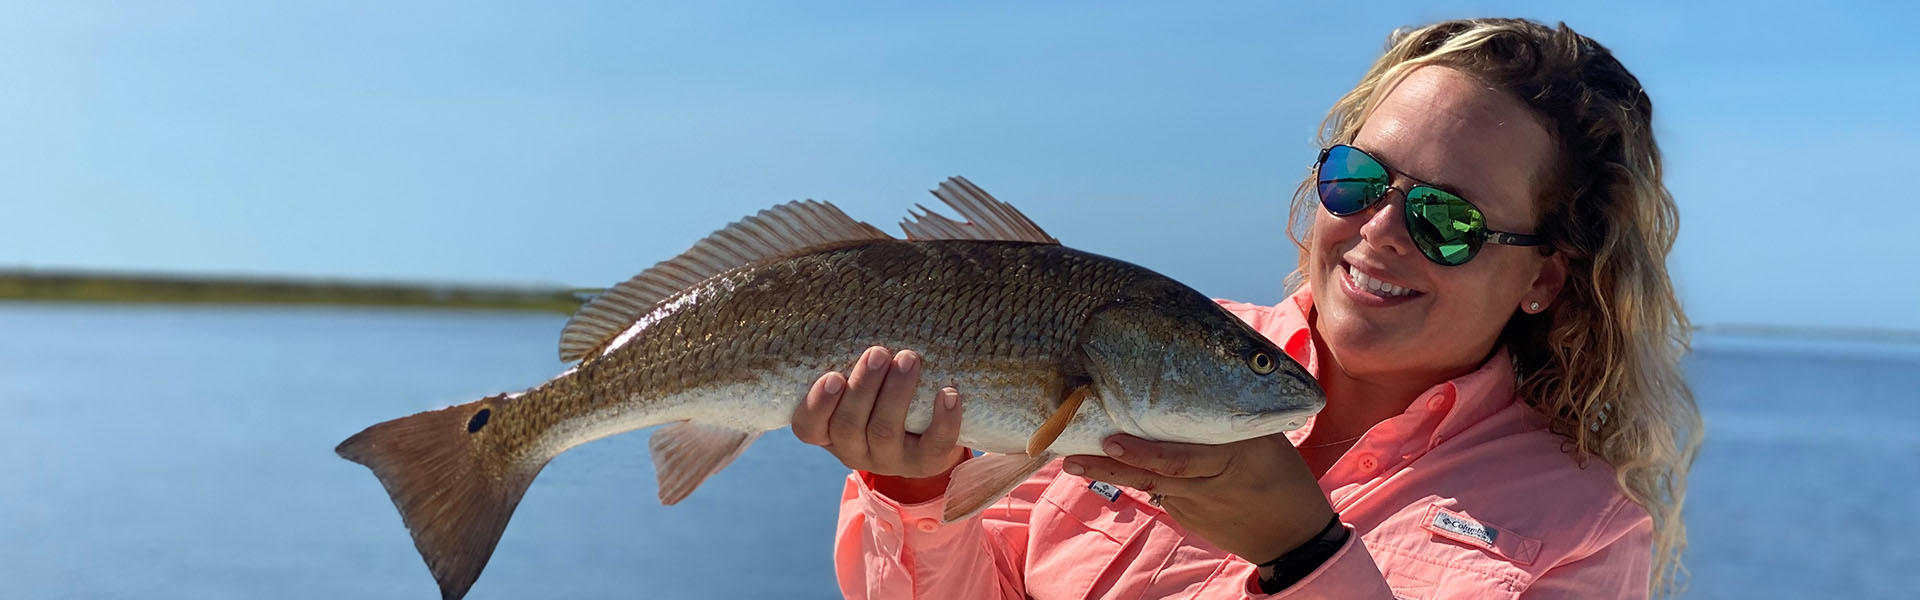 Florida Friendly Fishing Guide Certification Program - Florida Sea Grant